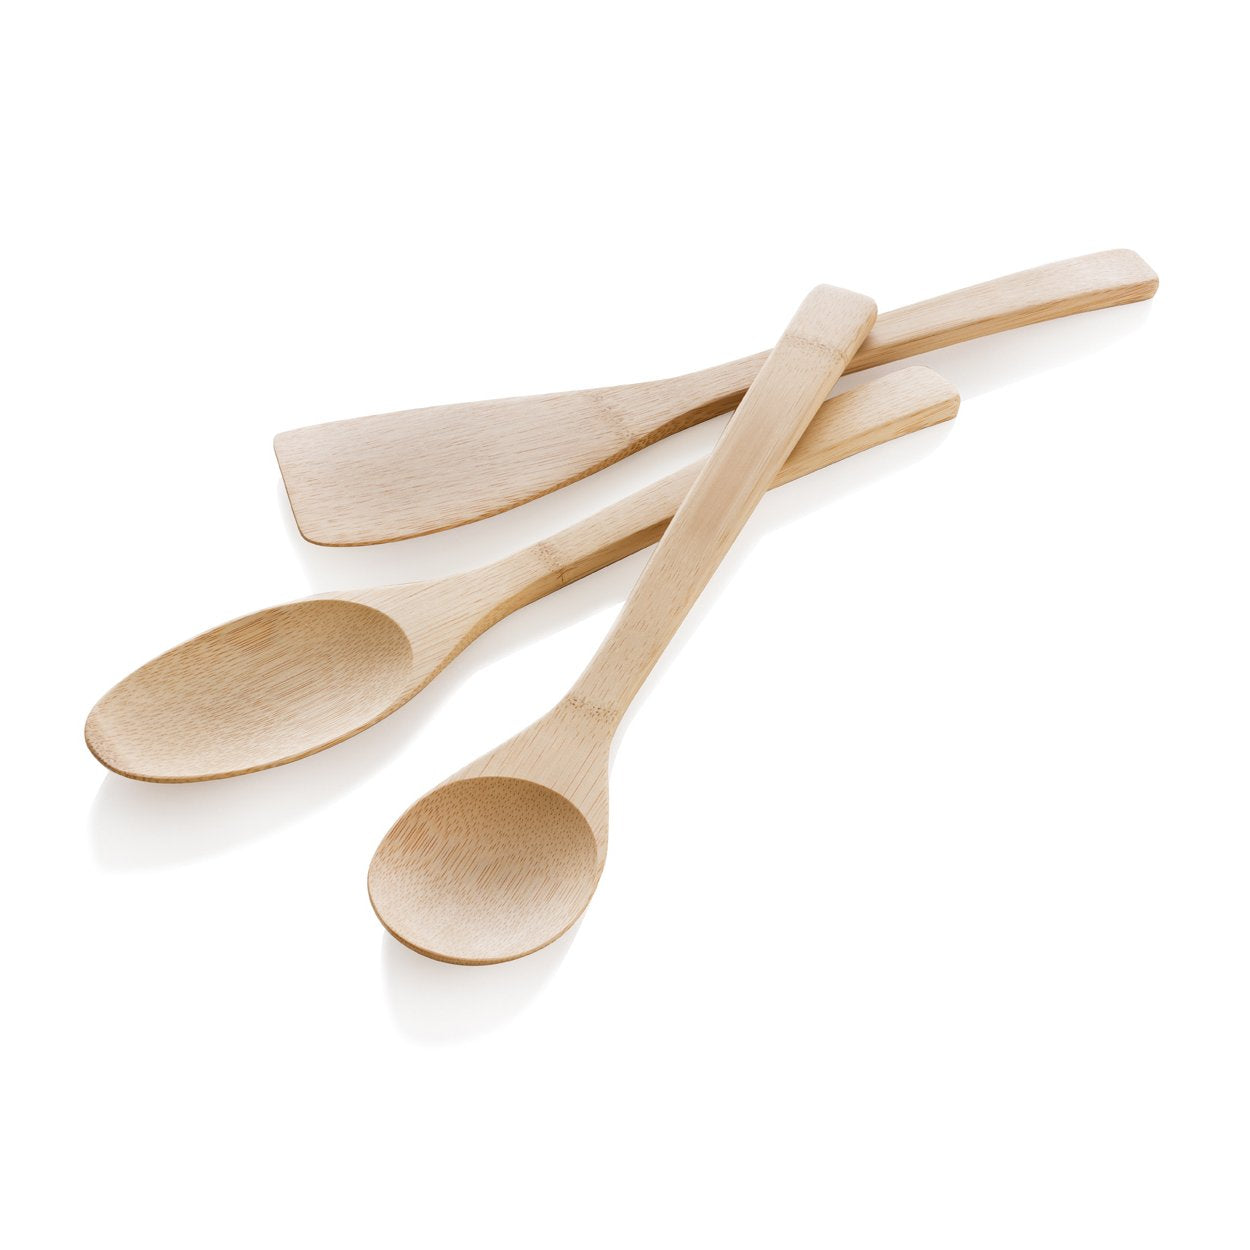 Kitchen Basics - Set of 3 Bamboo Utensils